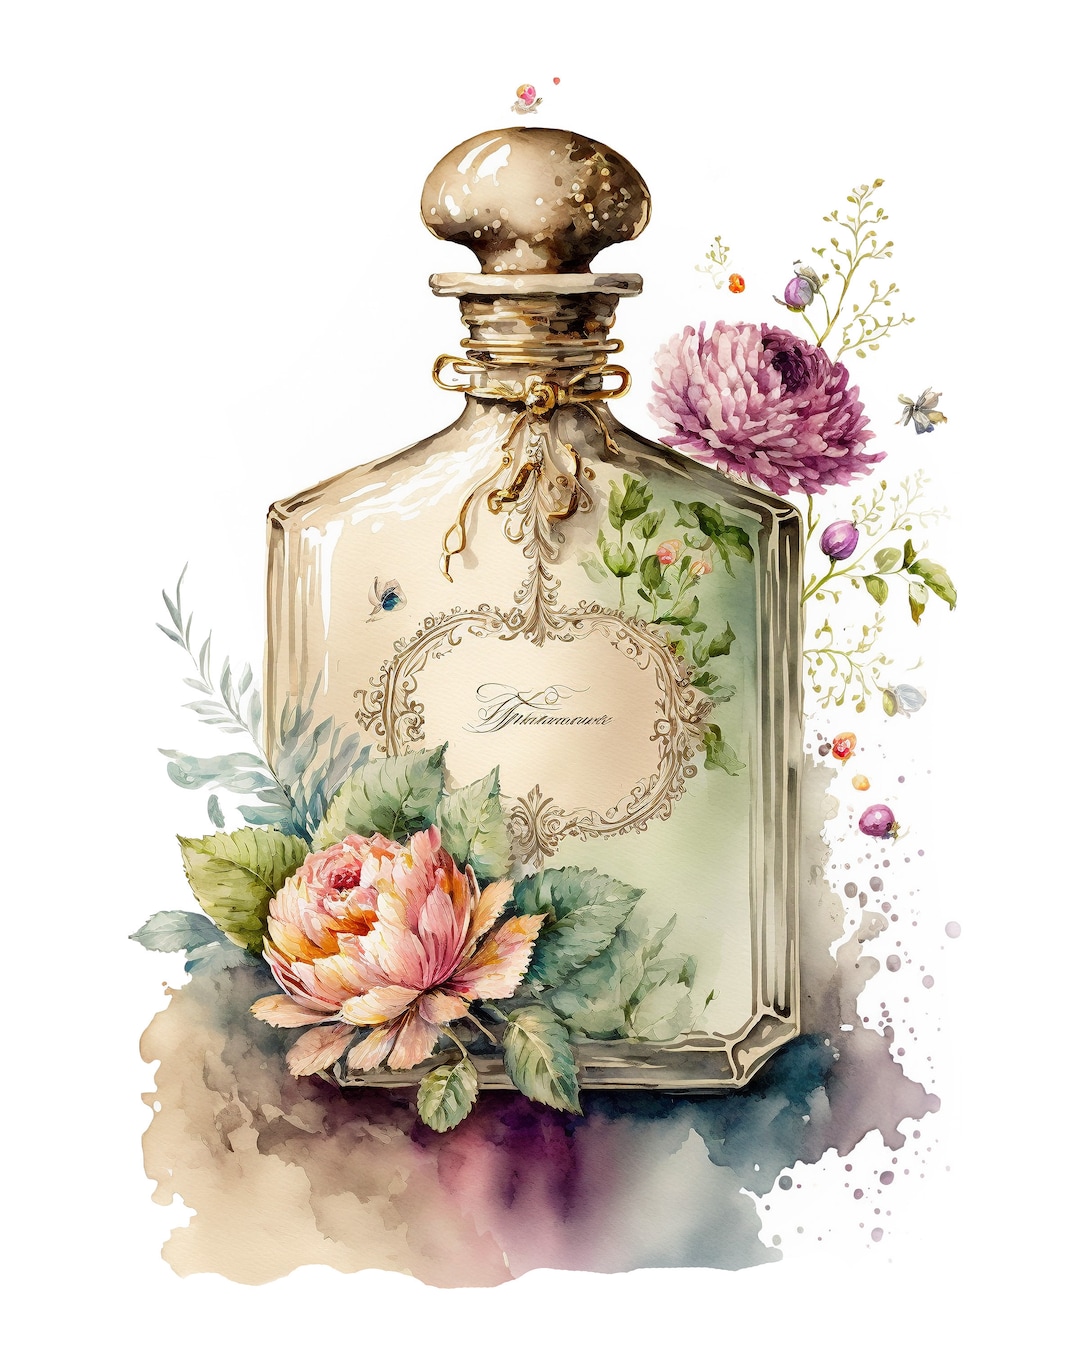 Watercolor Floral Vintage Perfume Bottle Digital Art Print / Instant ...